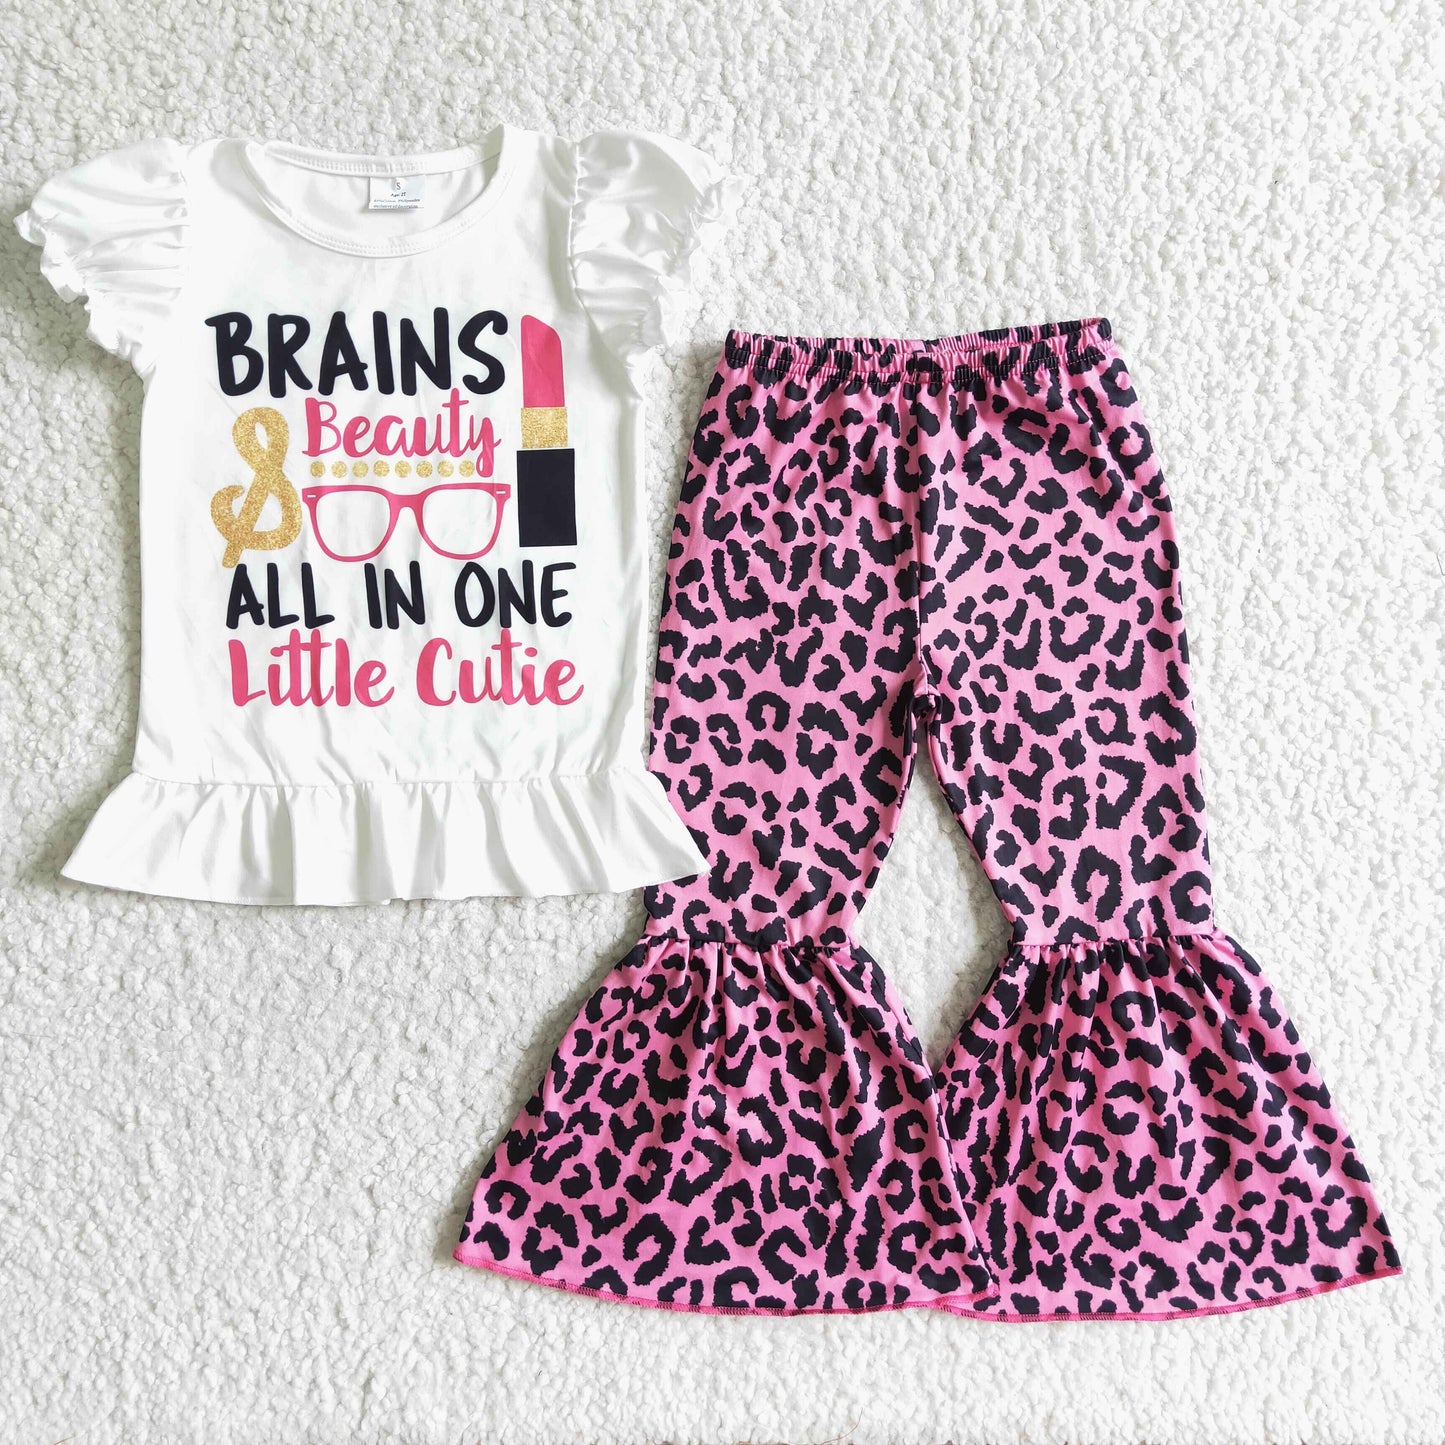 Brains beauty all in little one cutie leopard girls clothing set